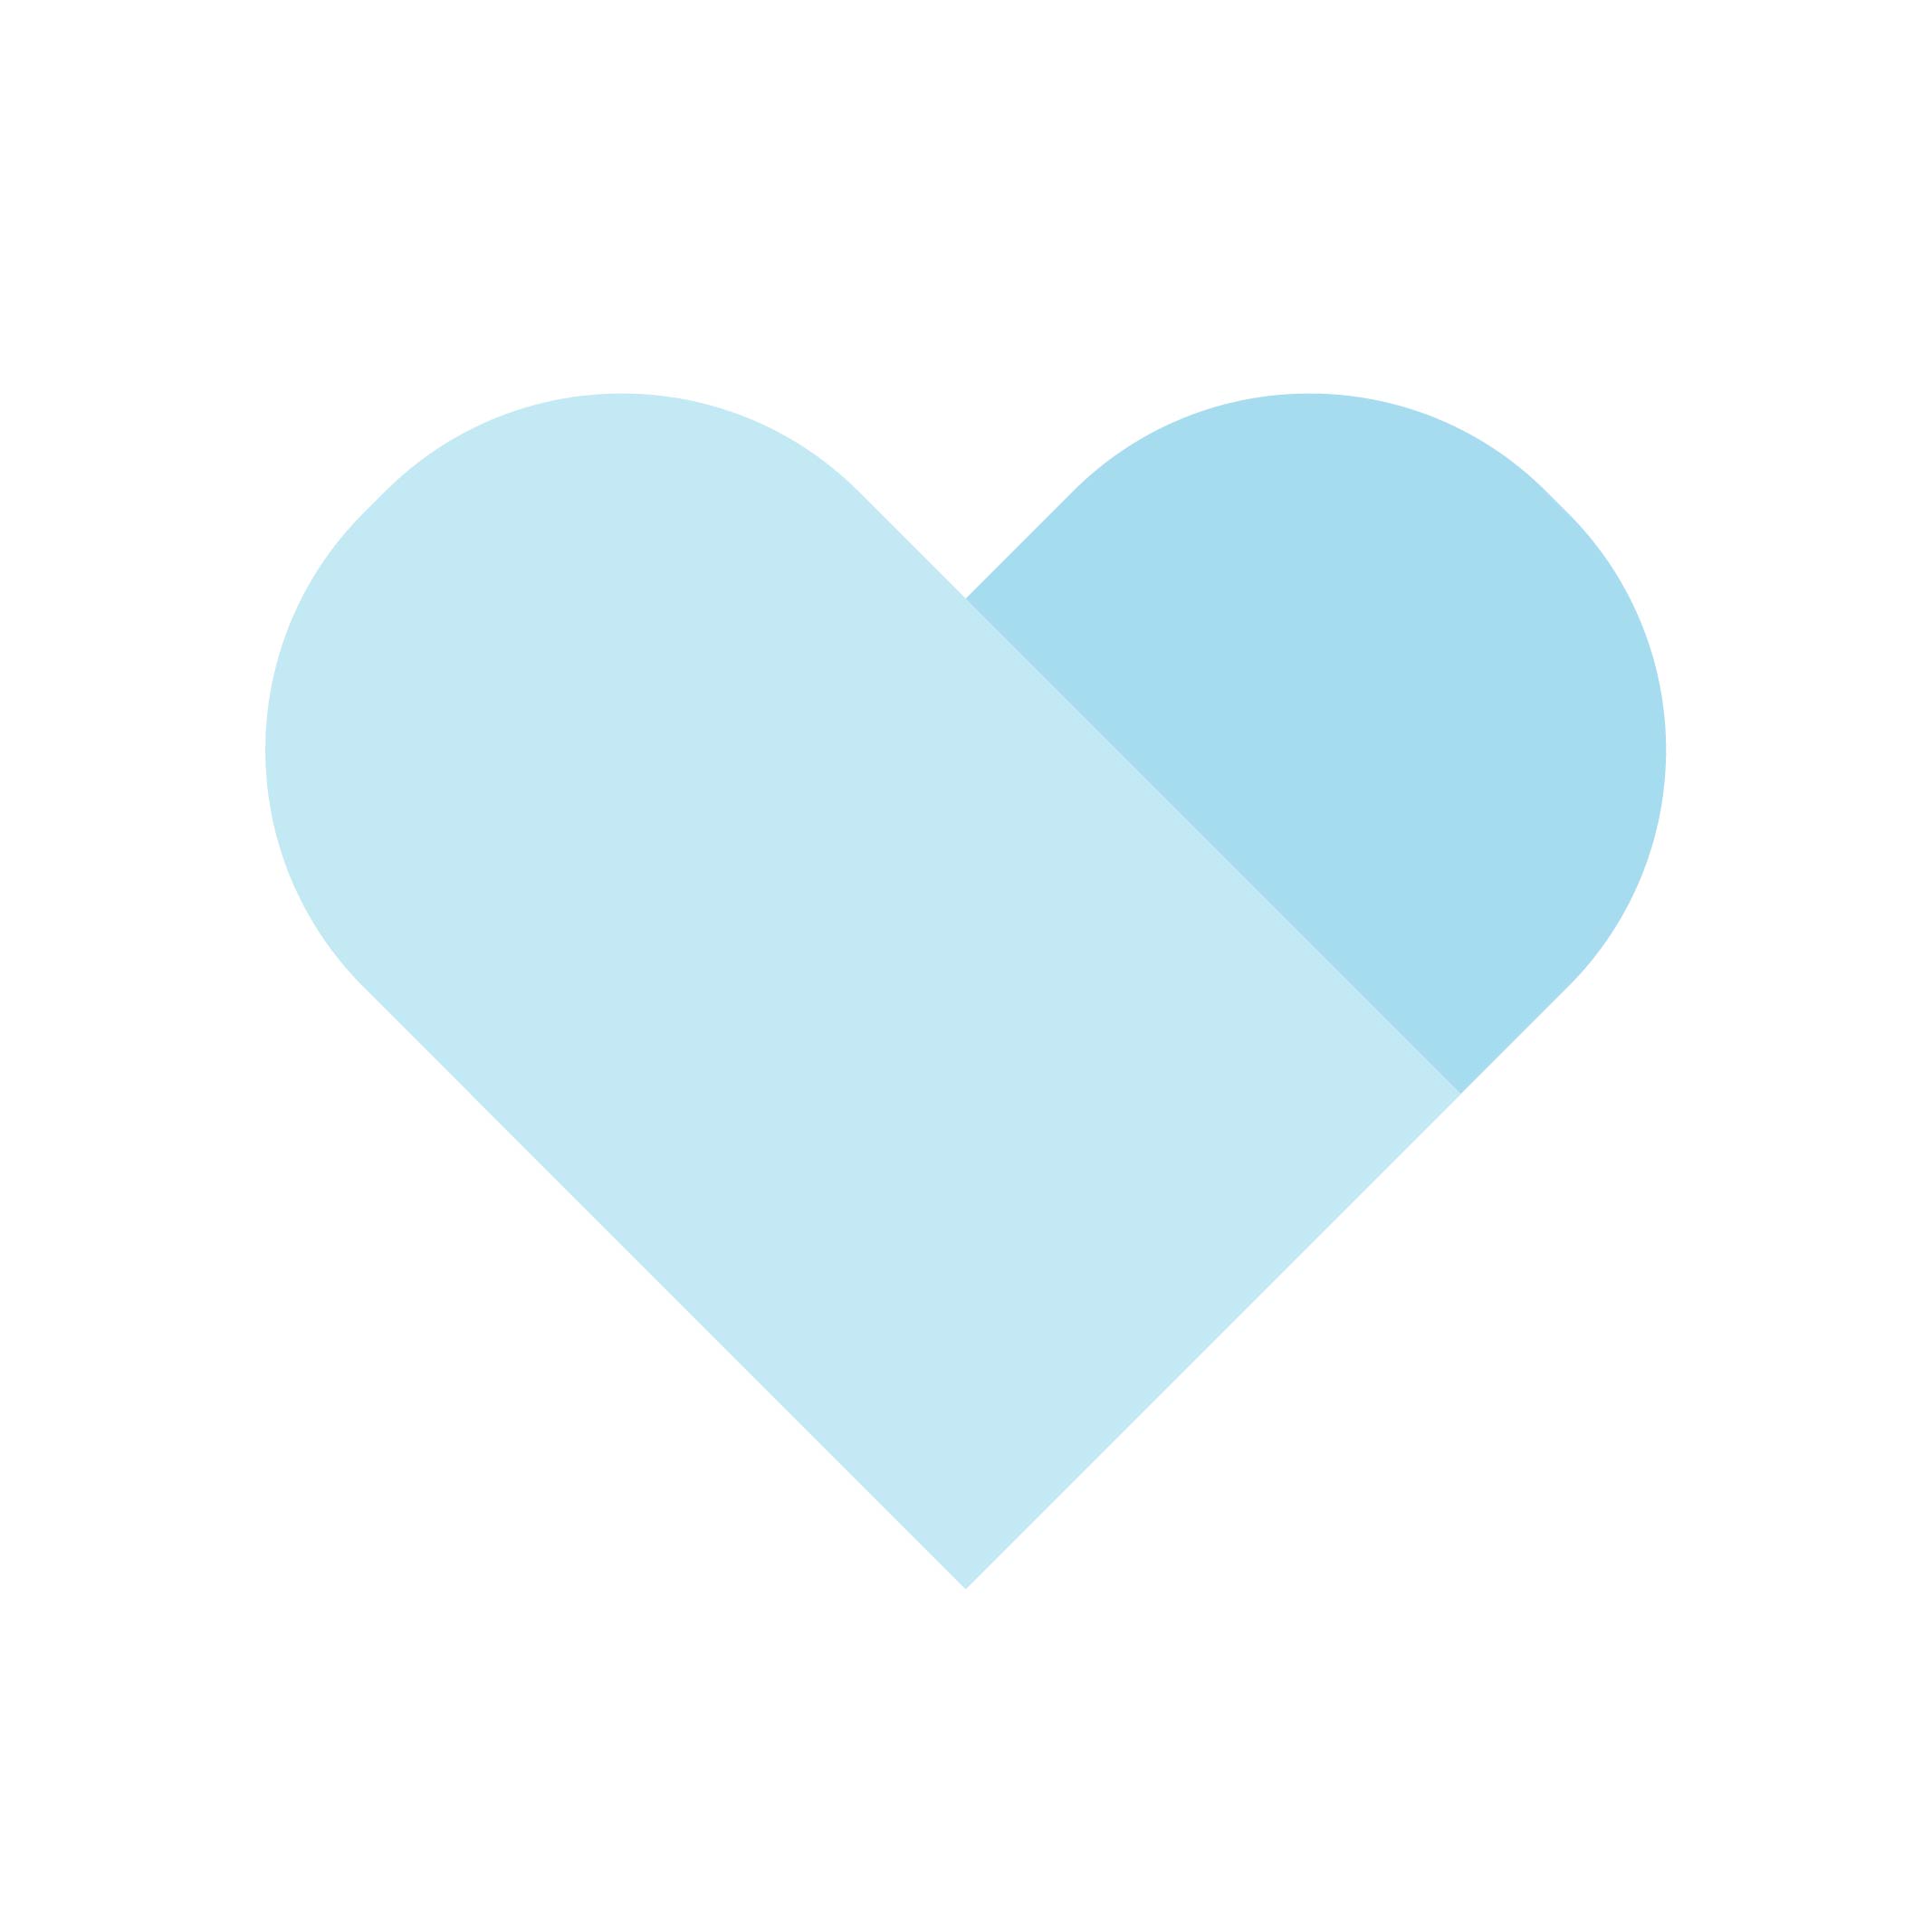 navy blue heart clip art